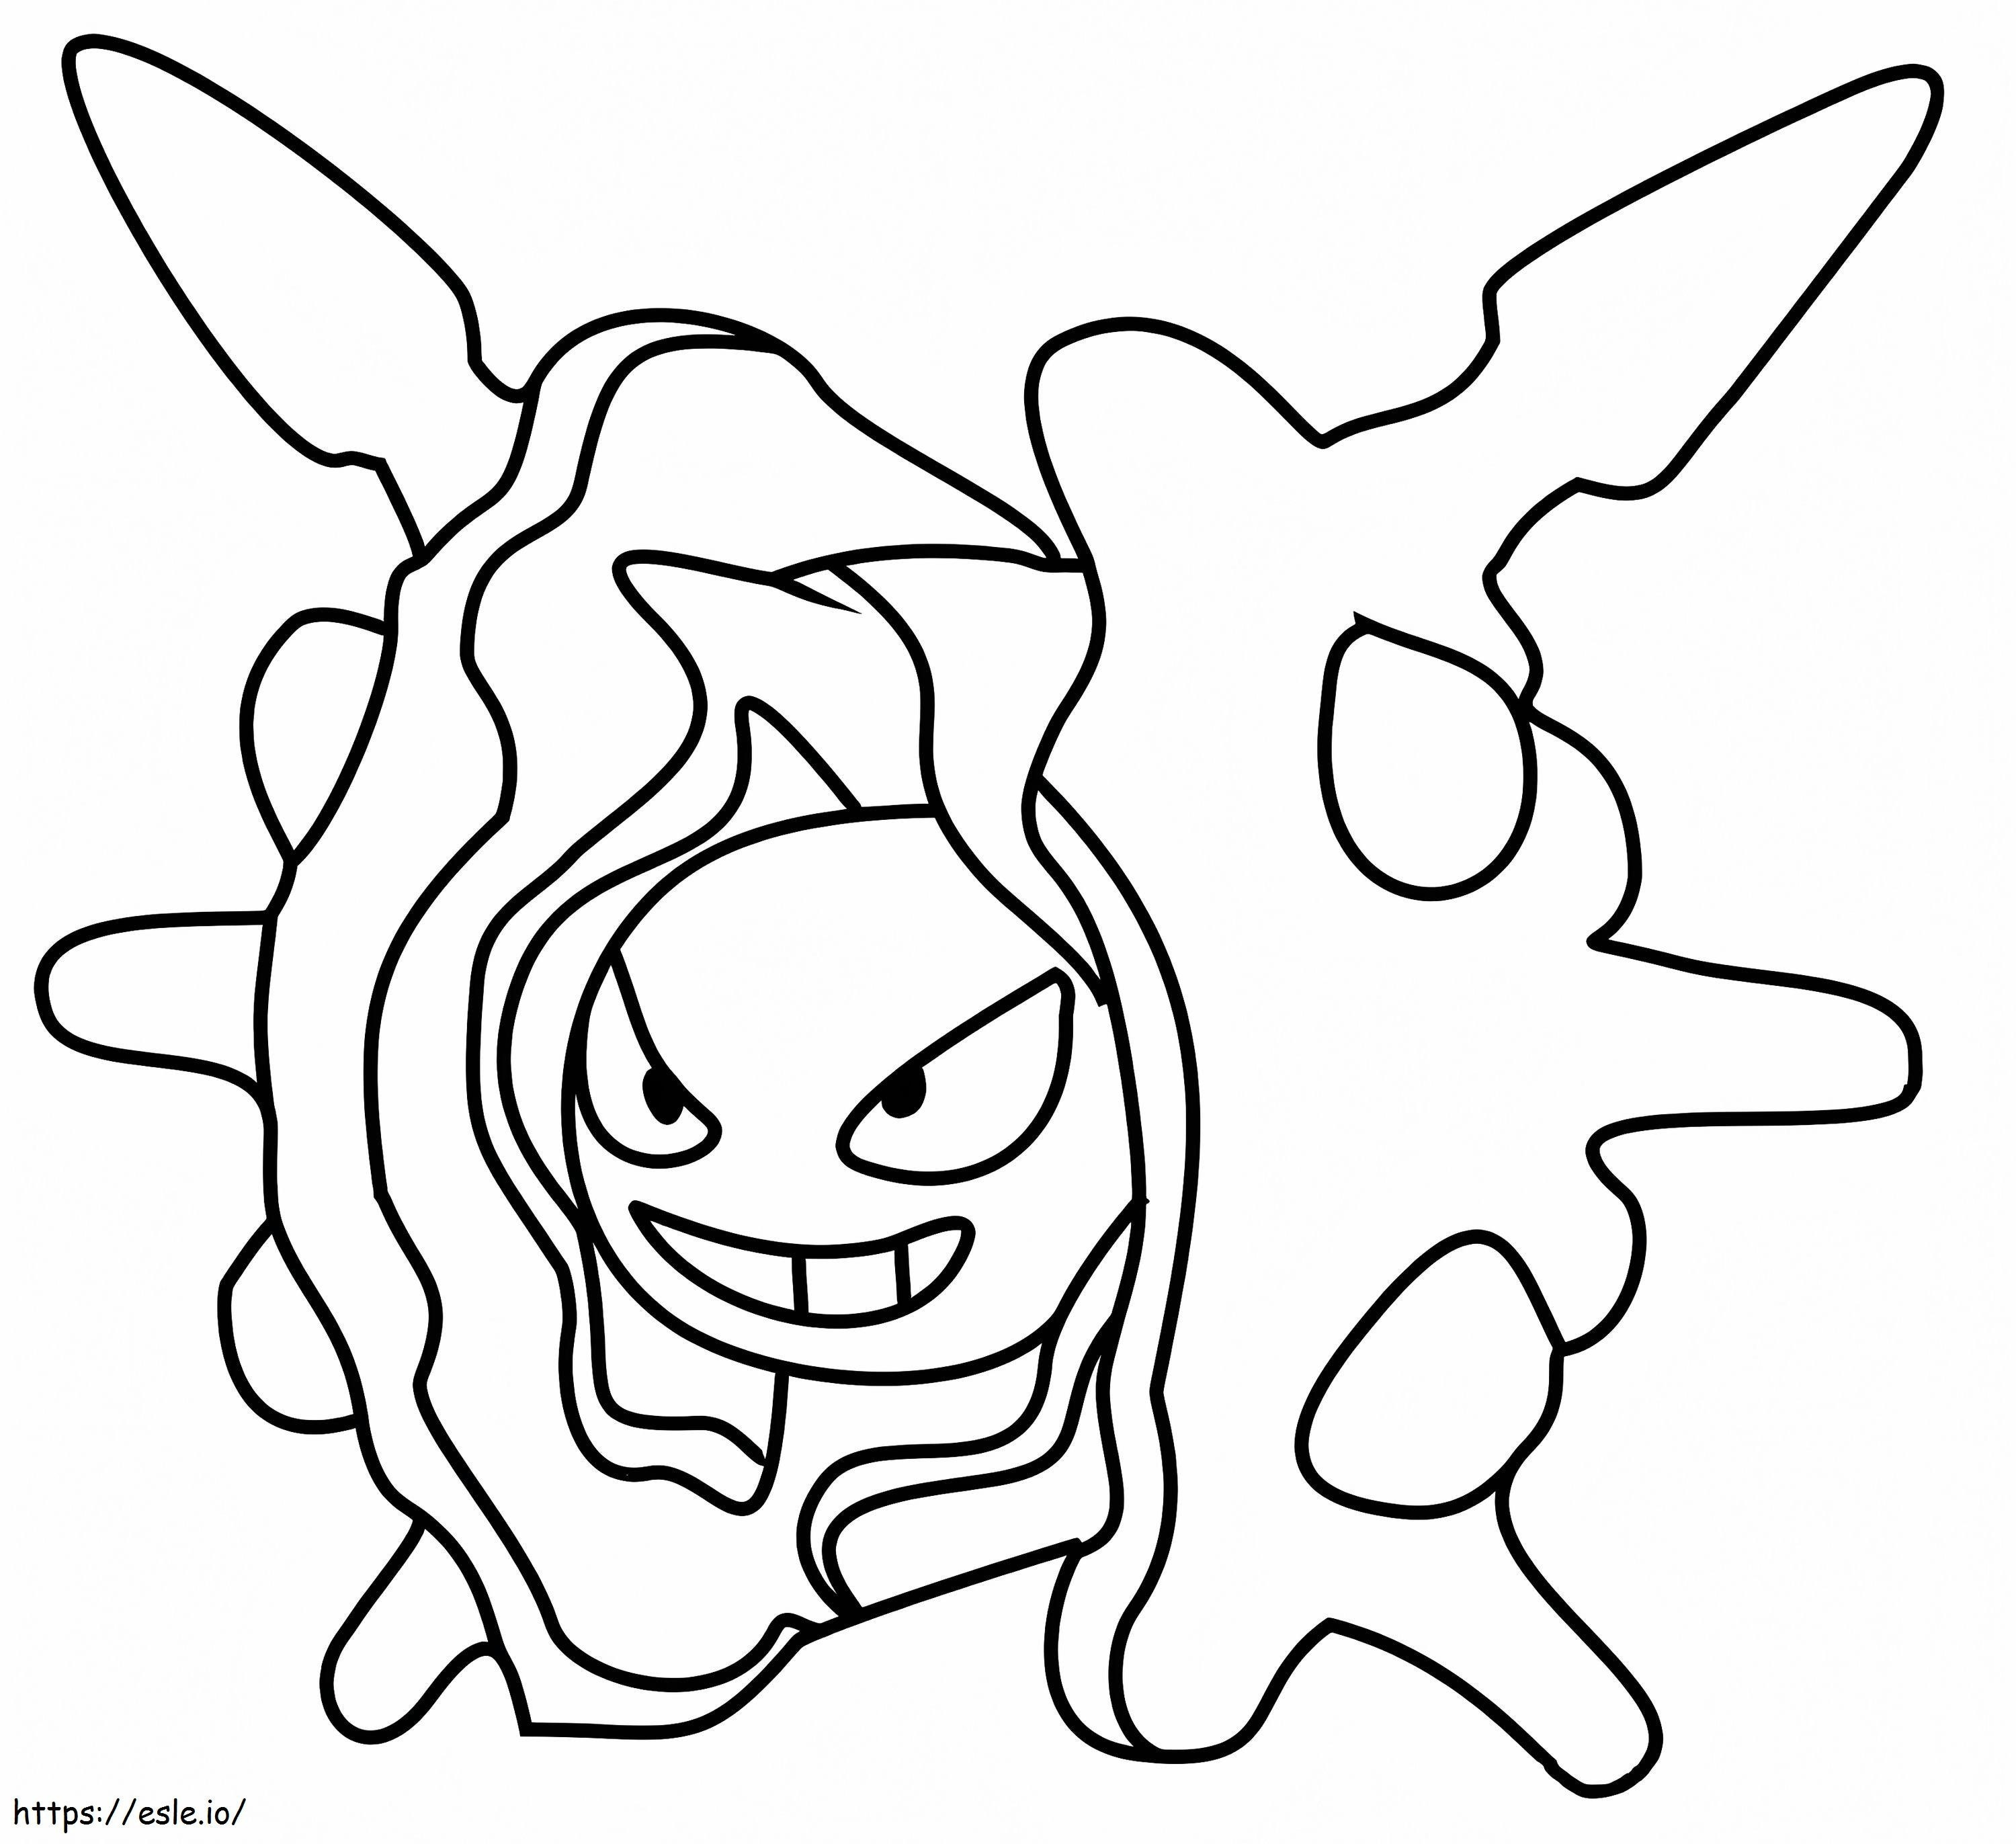 Coloriage Pokemon Cloyster à imprimer dessin